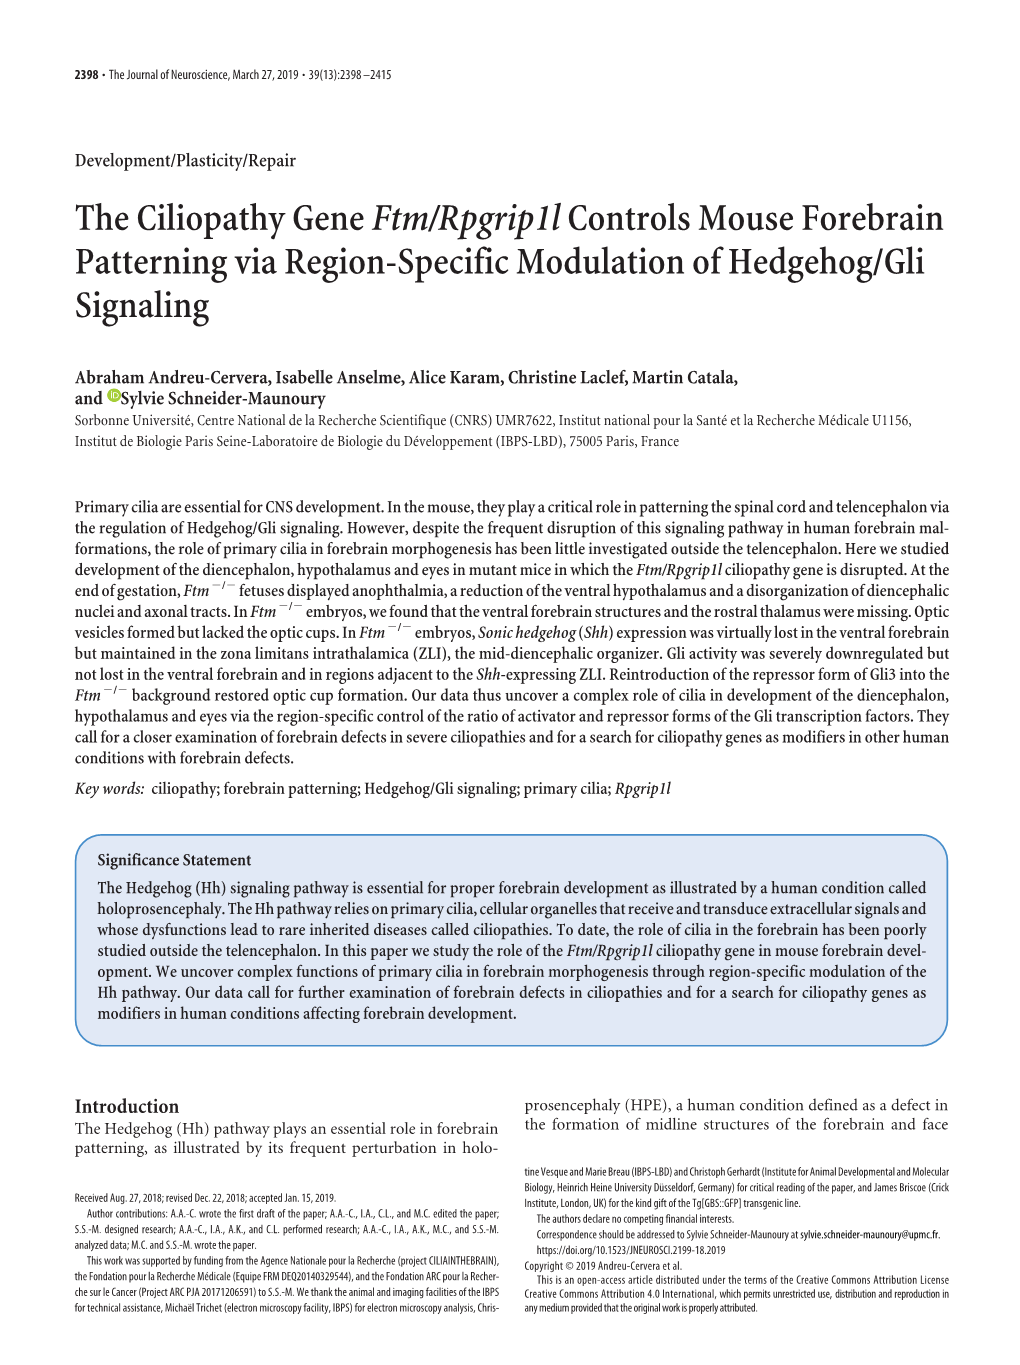 The Ciliopathy Gene Ftm/Rpgrip1l Controls Mouse Forebrain Patterning Via Region-Specific Modulation of Hedgehog/Gli Signaling